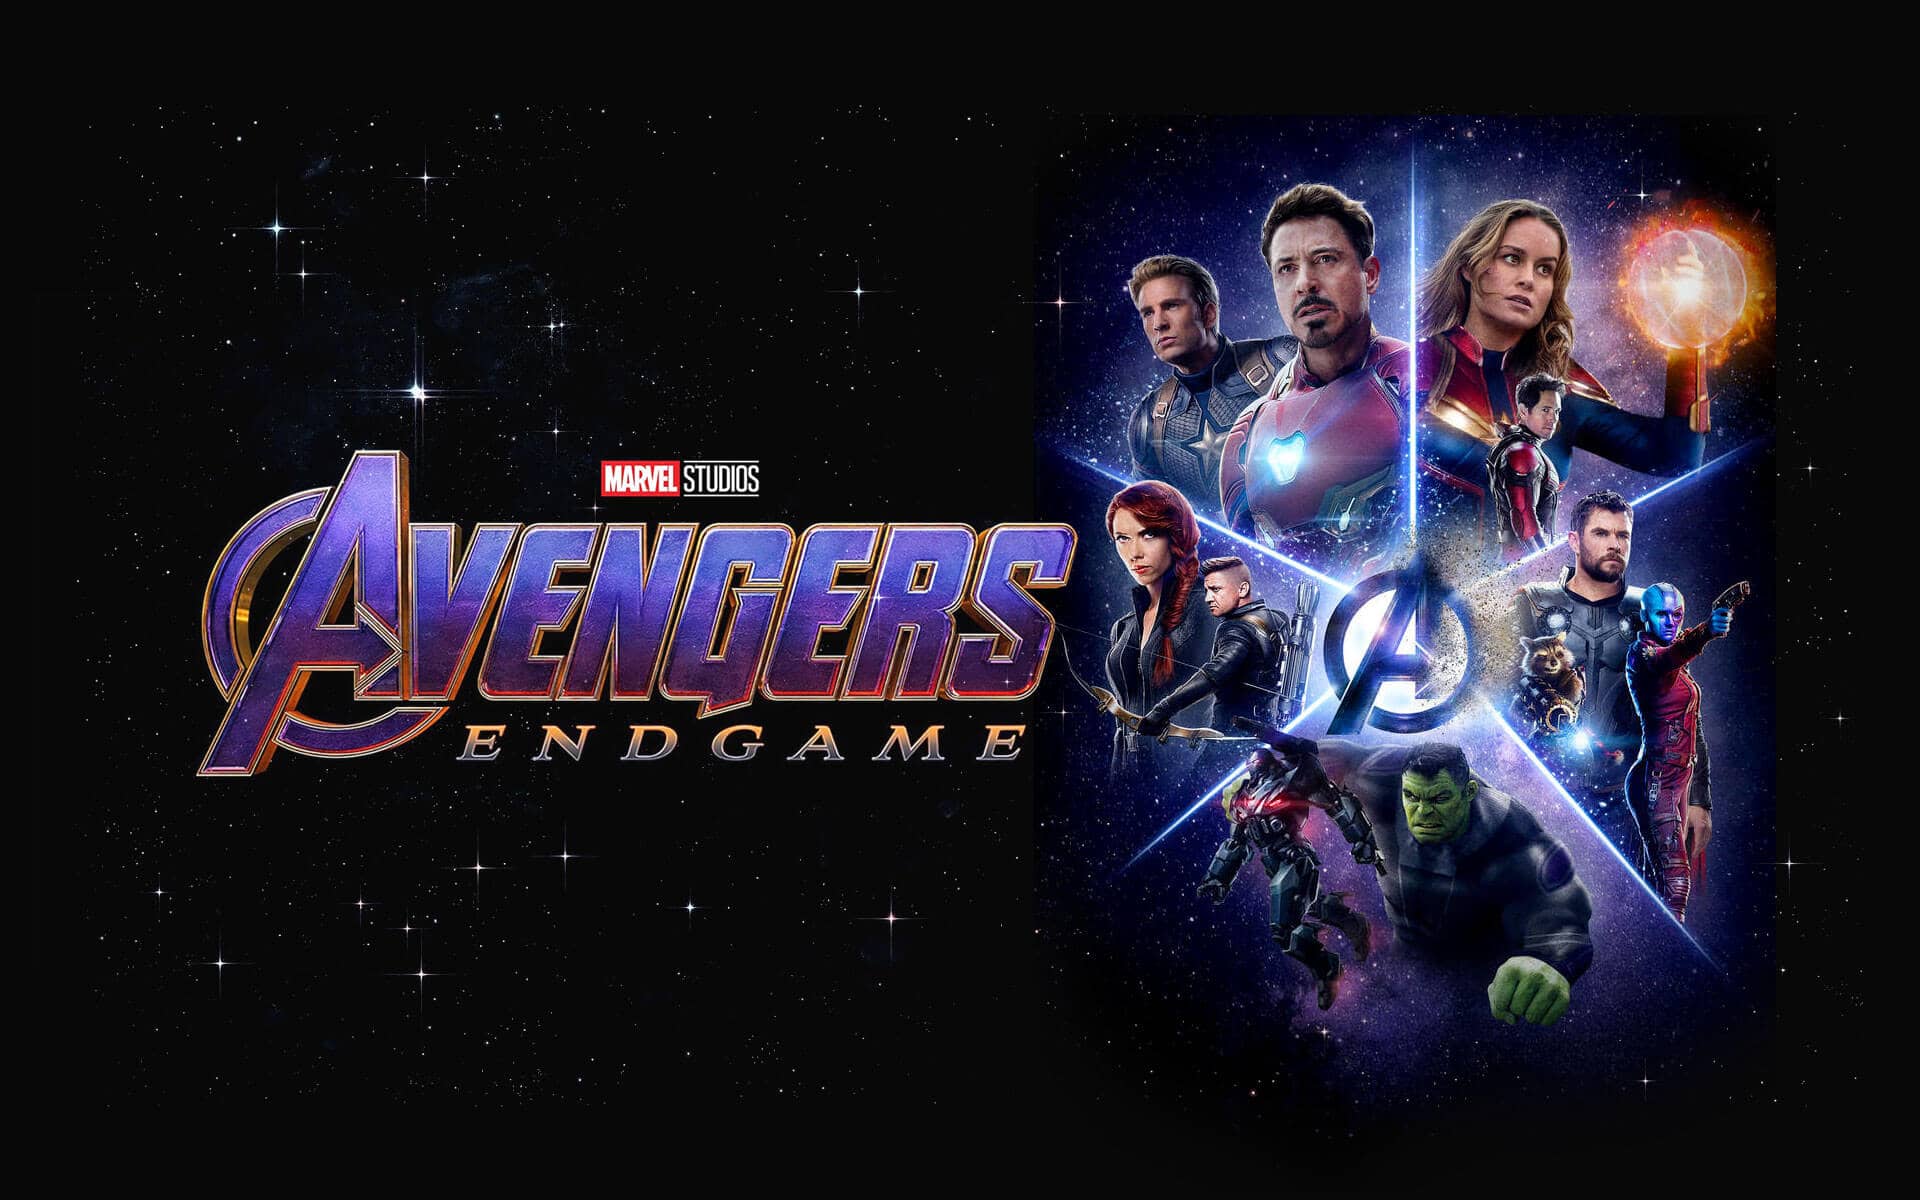 Avengers Endgame (2019) Hindi + English Full HD Movie